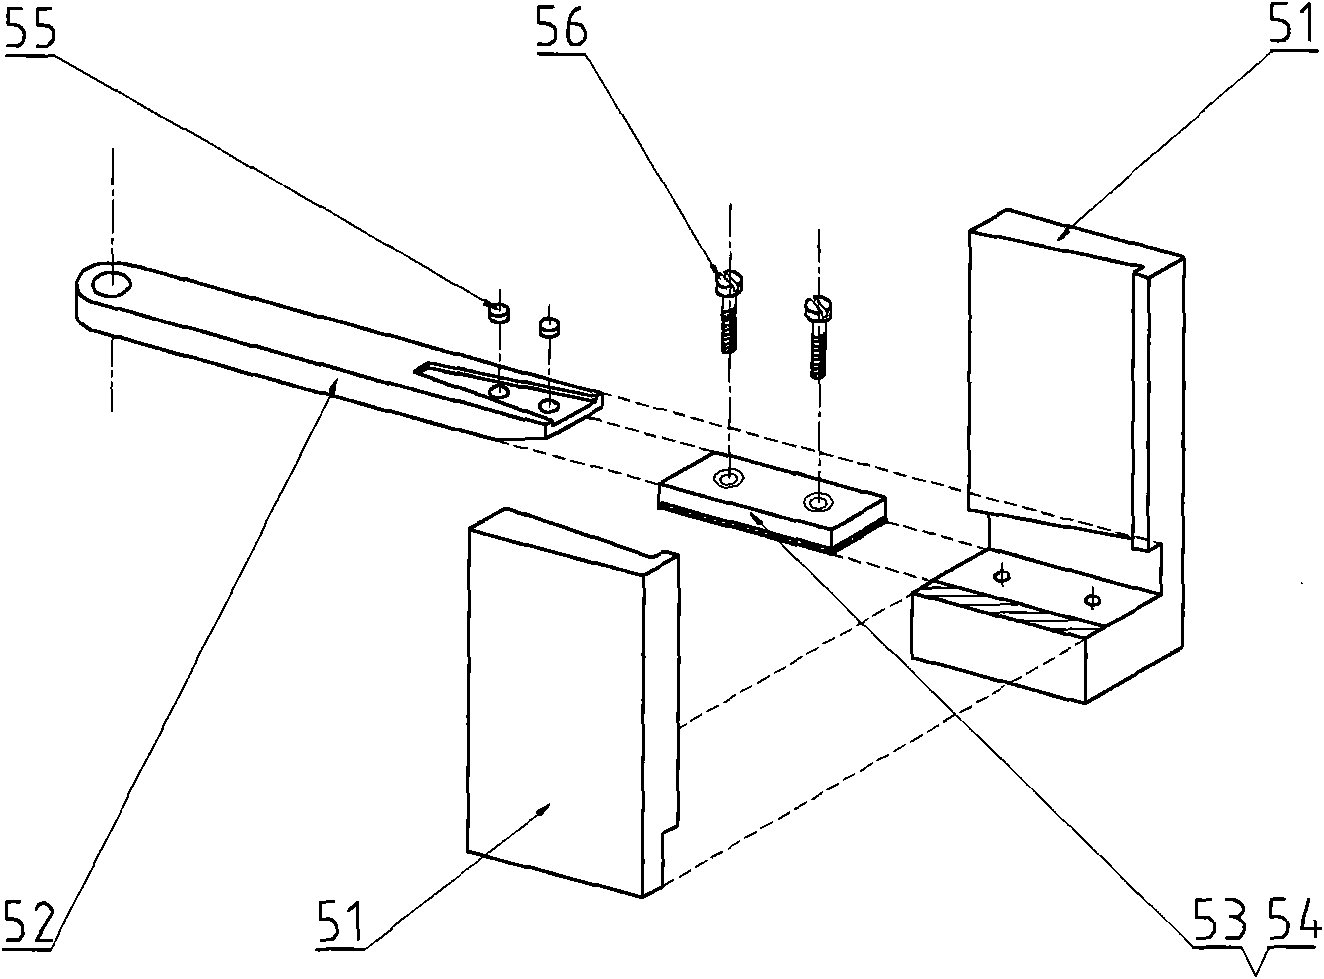 Automatic feeding device of thin type sheet iron piece